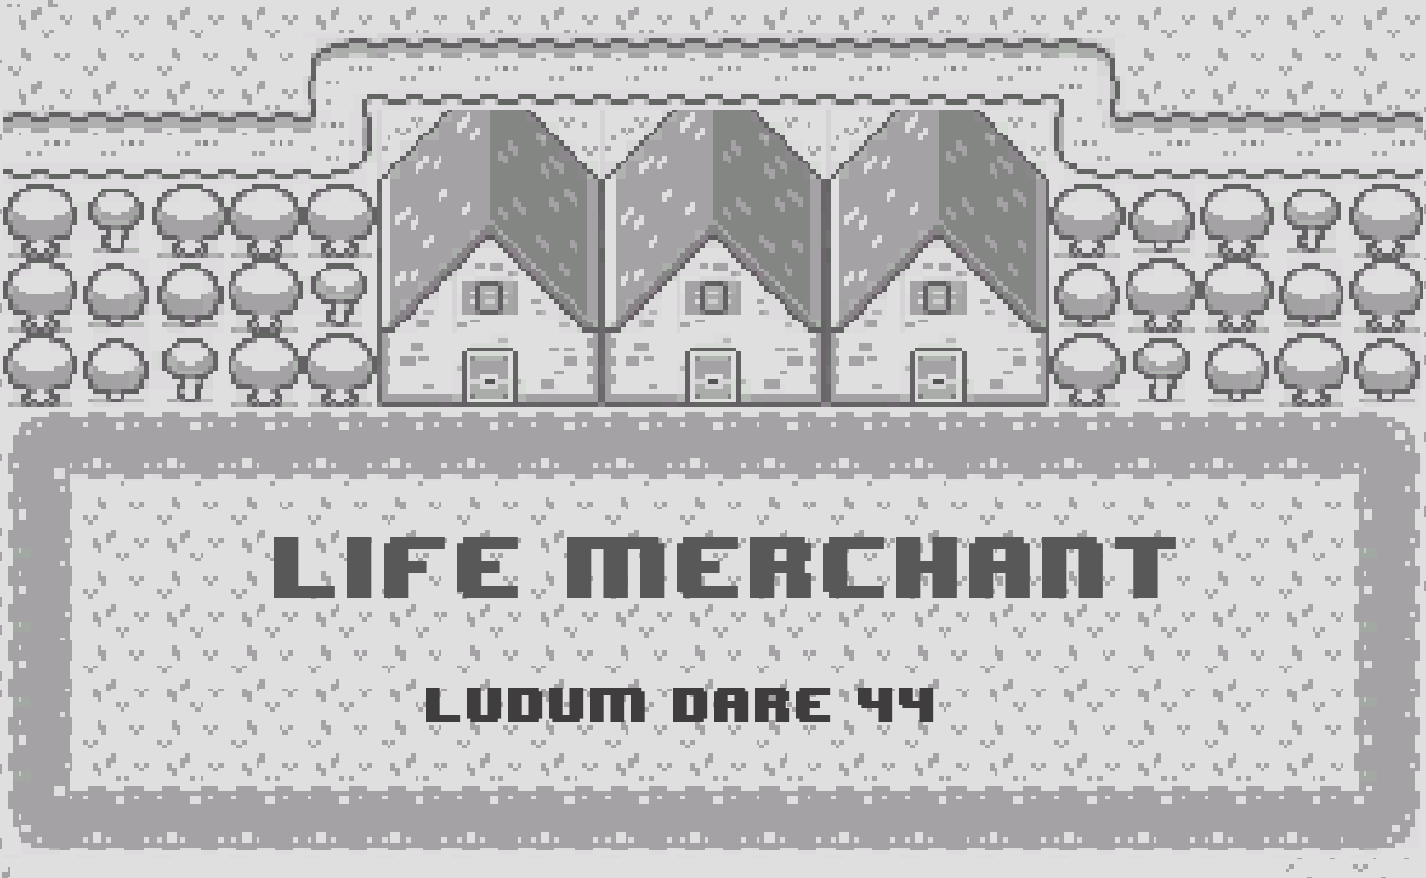 Life Merchant - Original LD44